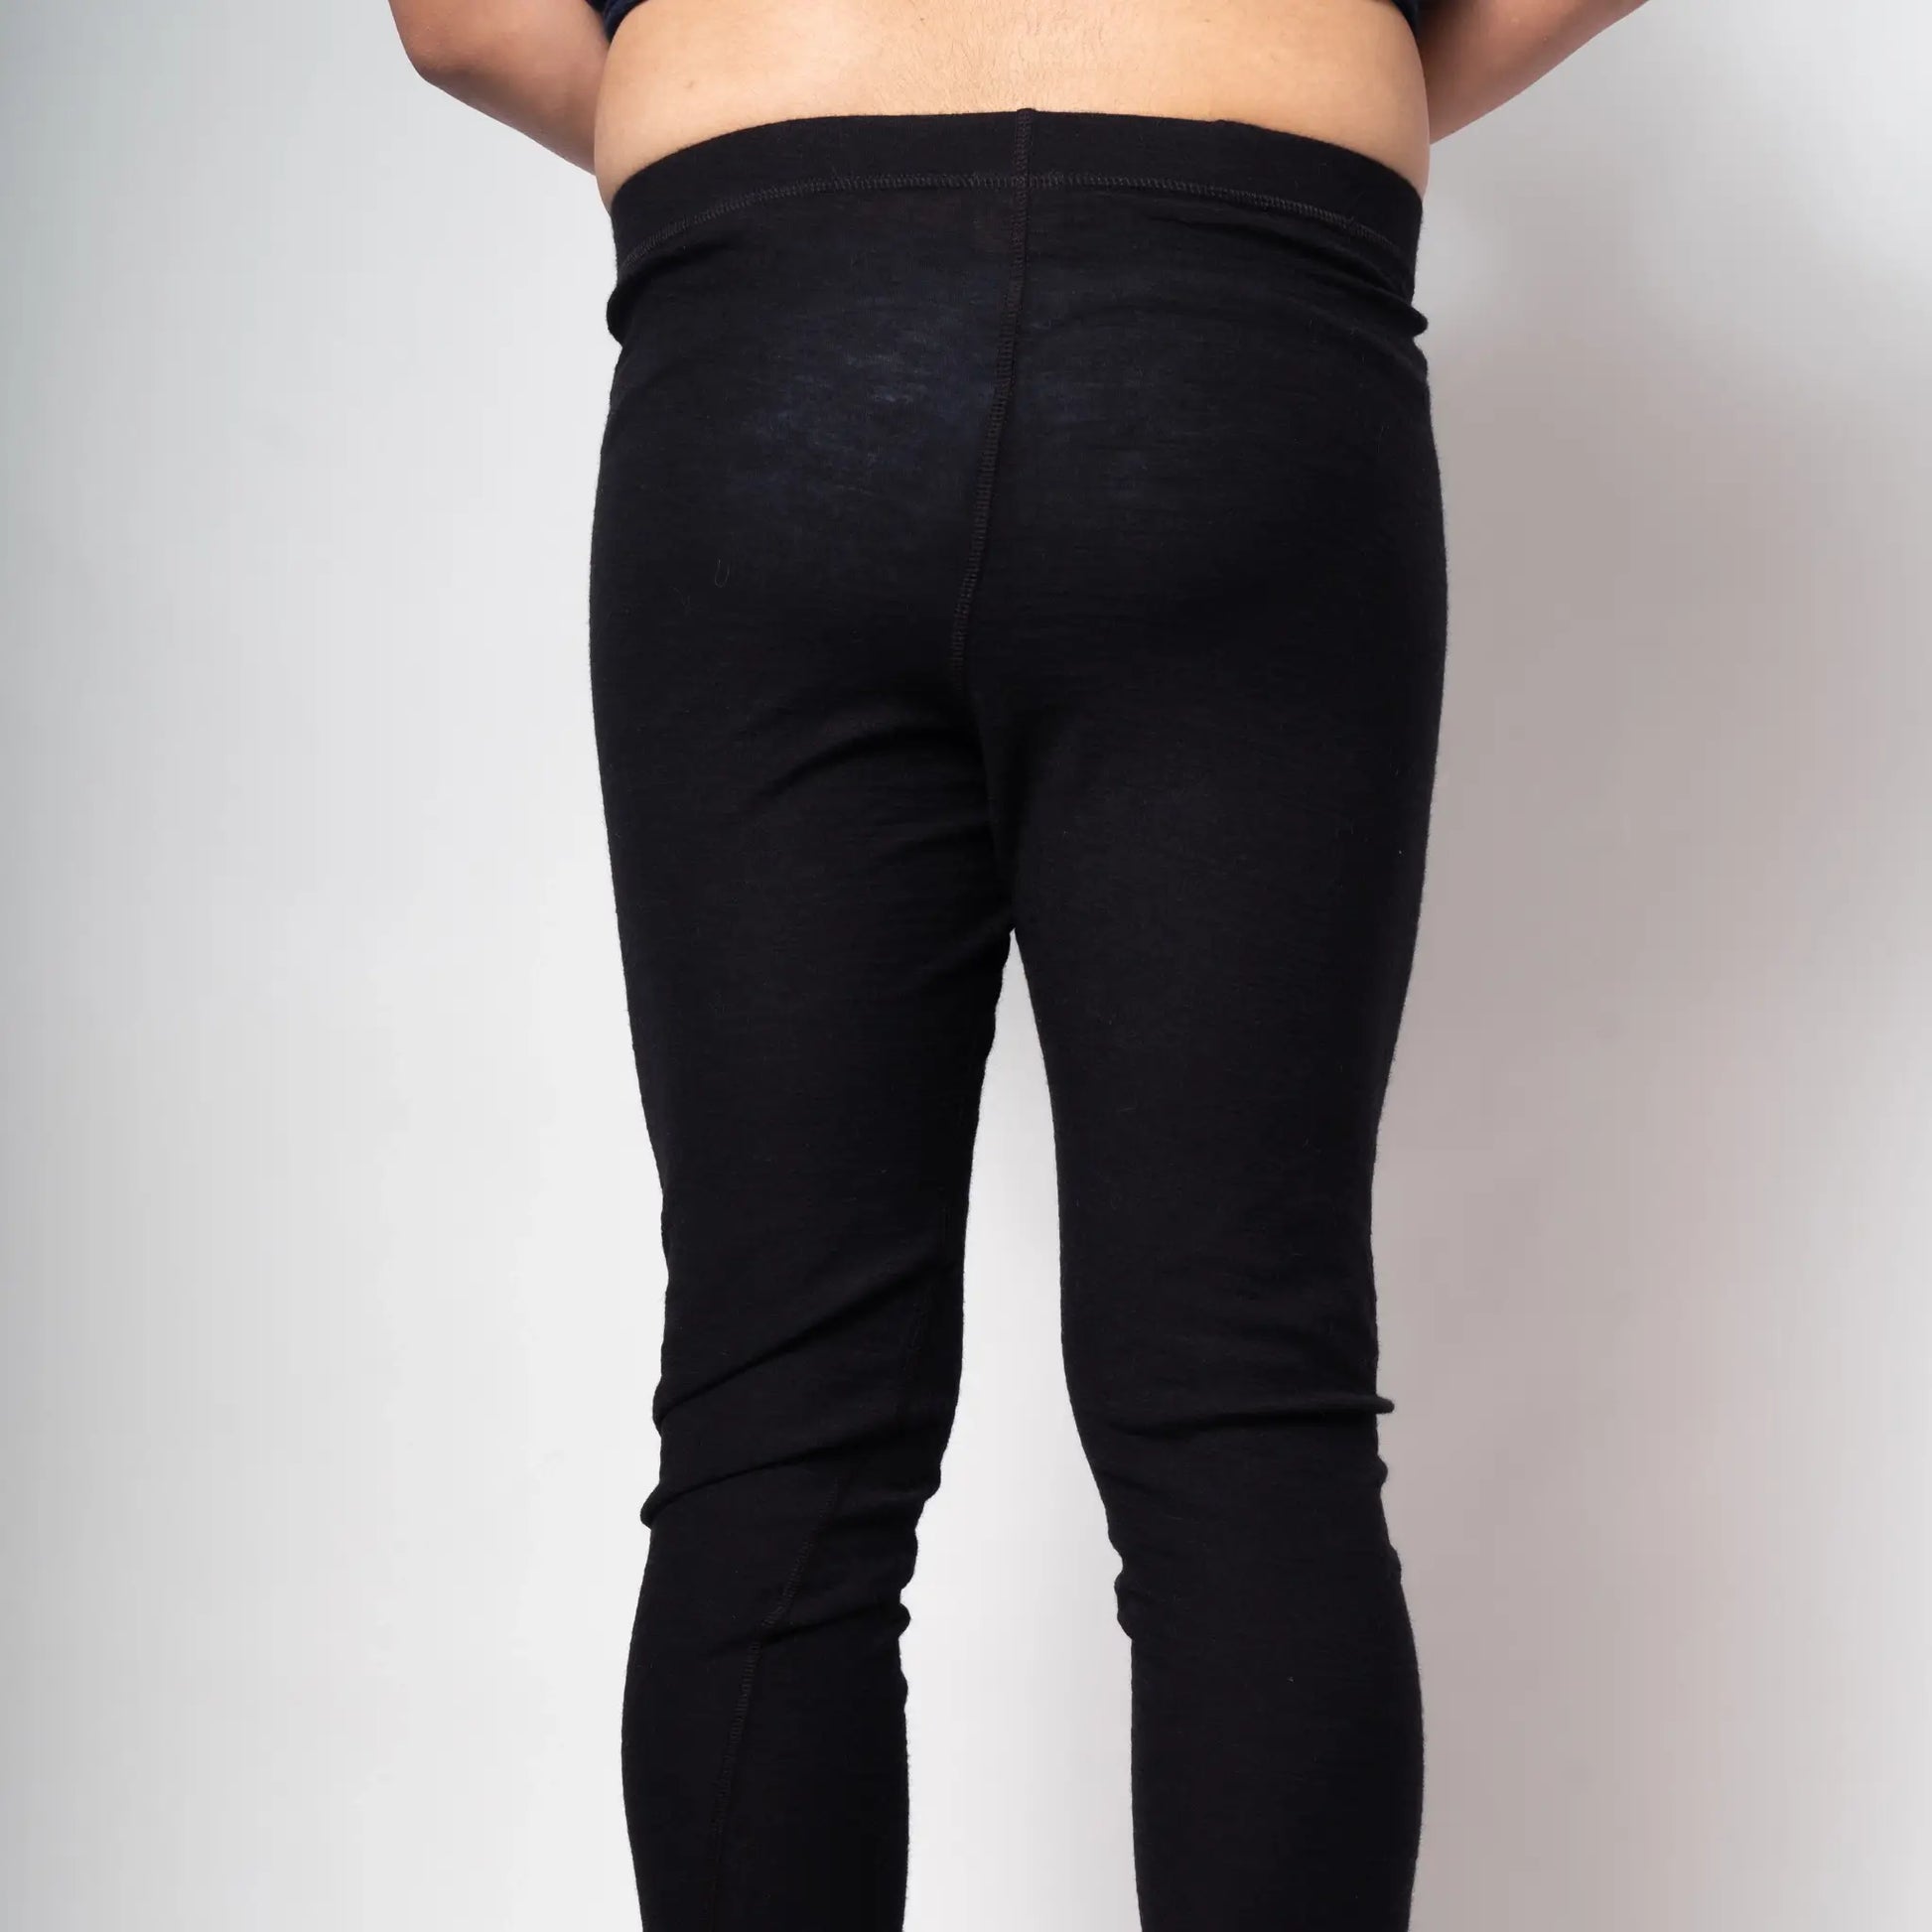 mens leggings ultralight160 most sustainable color black